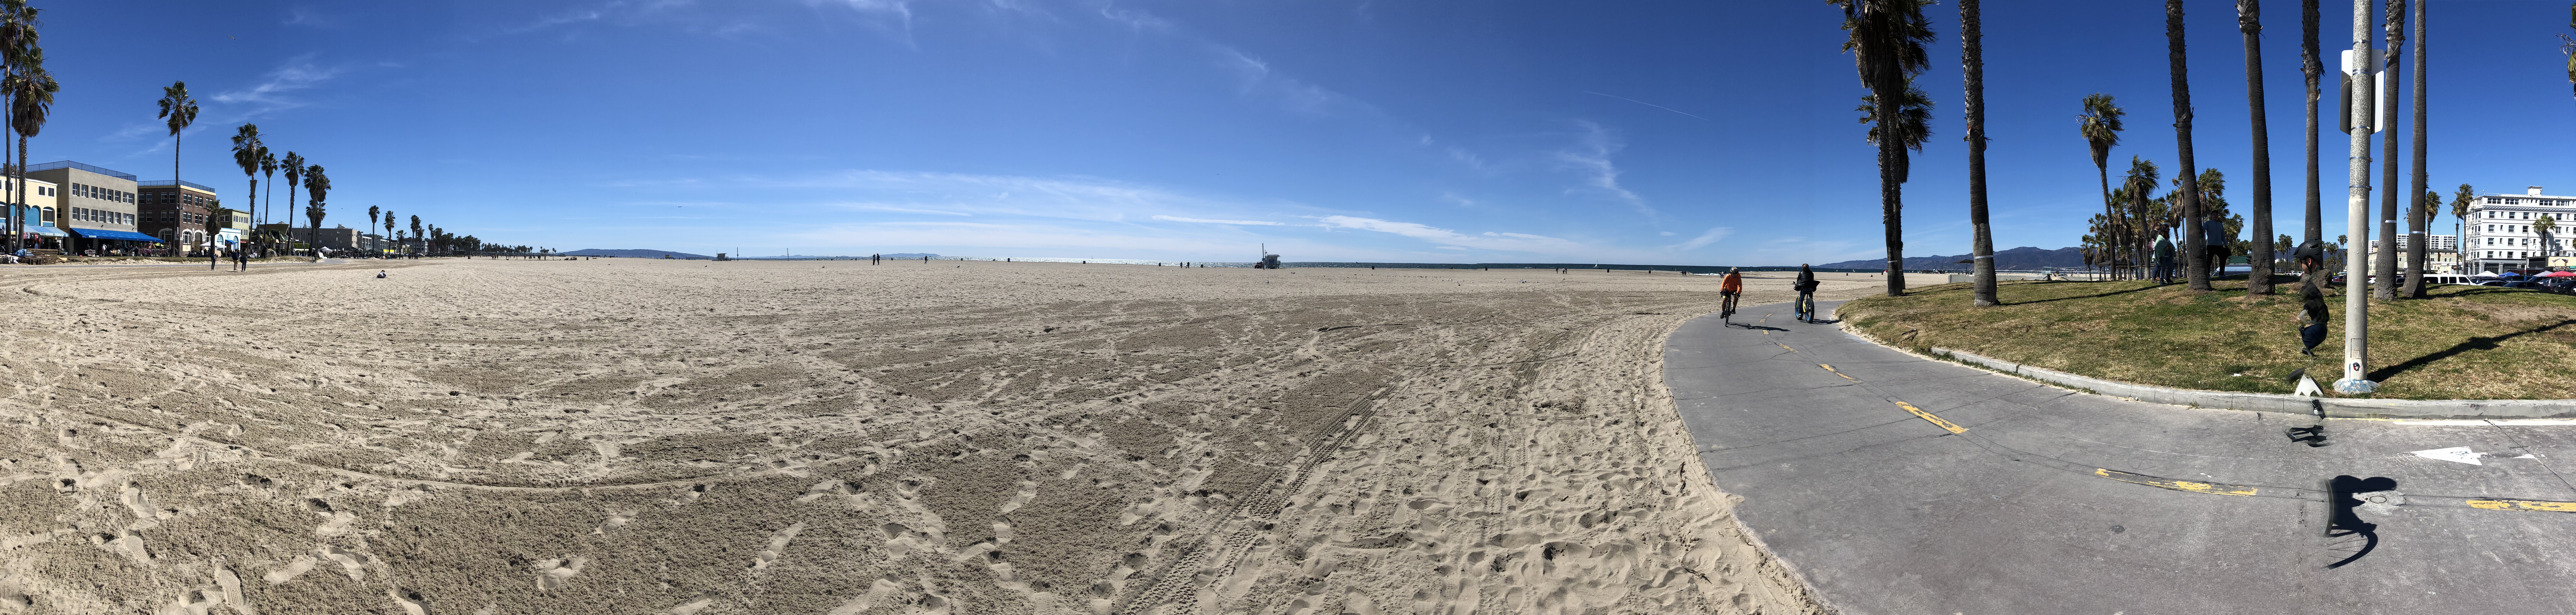 A view of the Venice Beach boardwalk